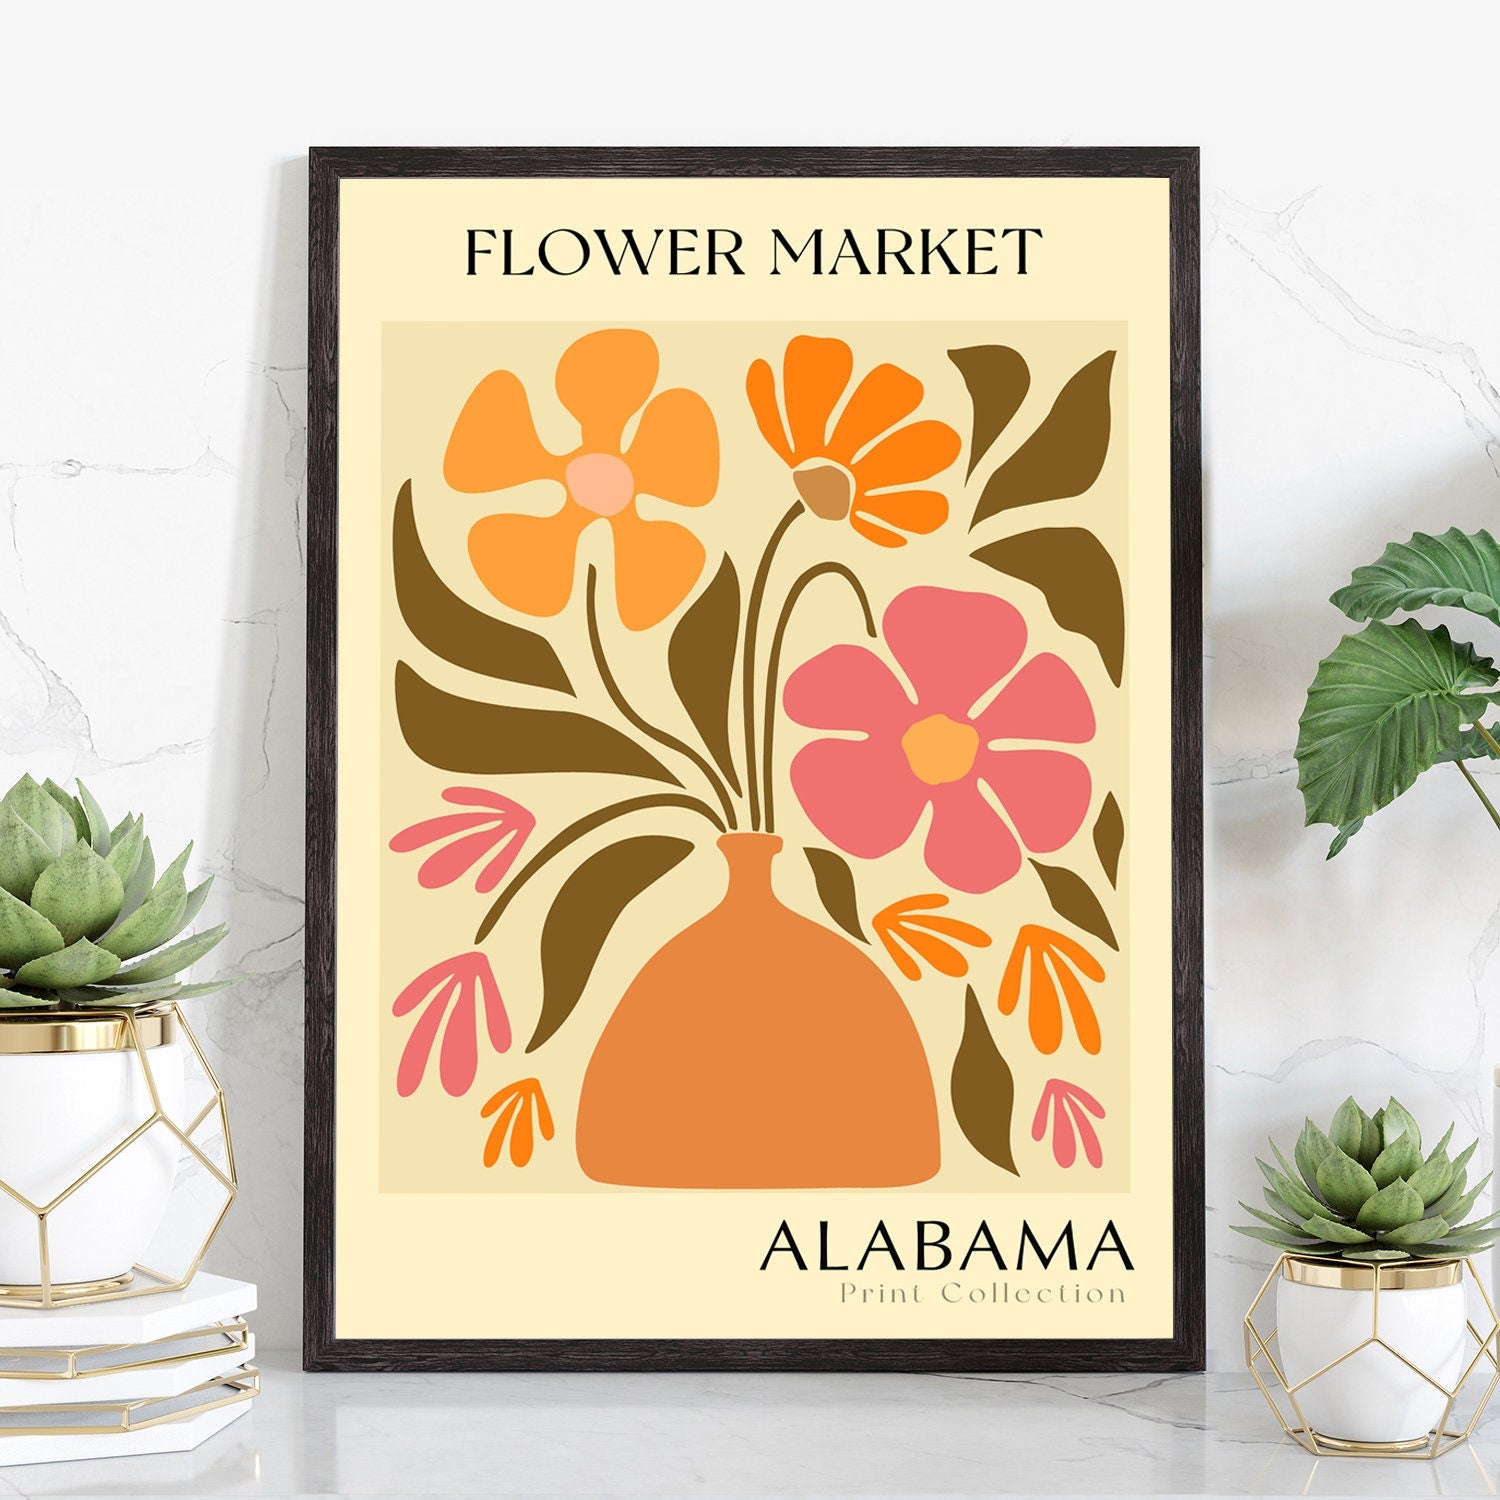 Alabama State flower print, USA states poster, Alabama flower market poster, Botanical posters, Natural poster artwork, Boho floral wall art